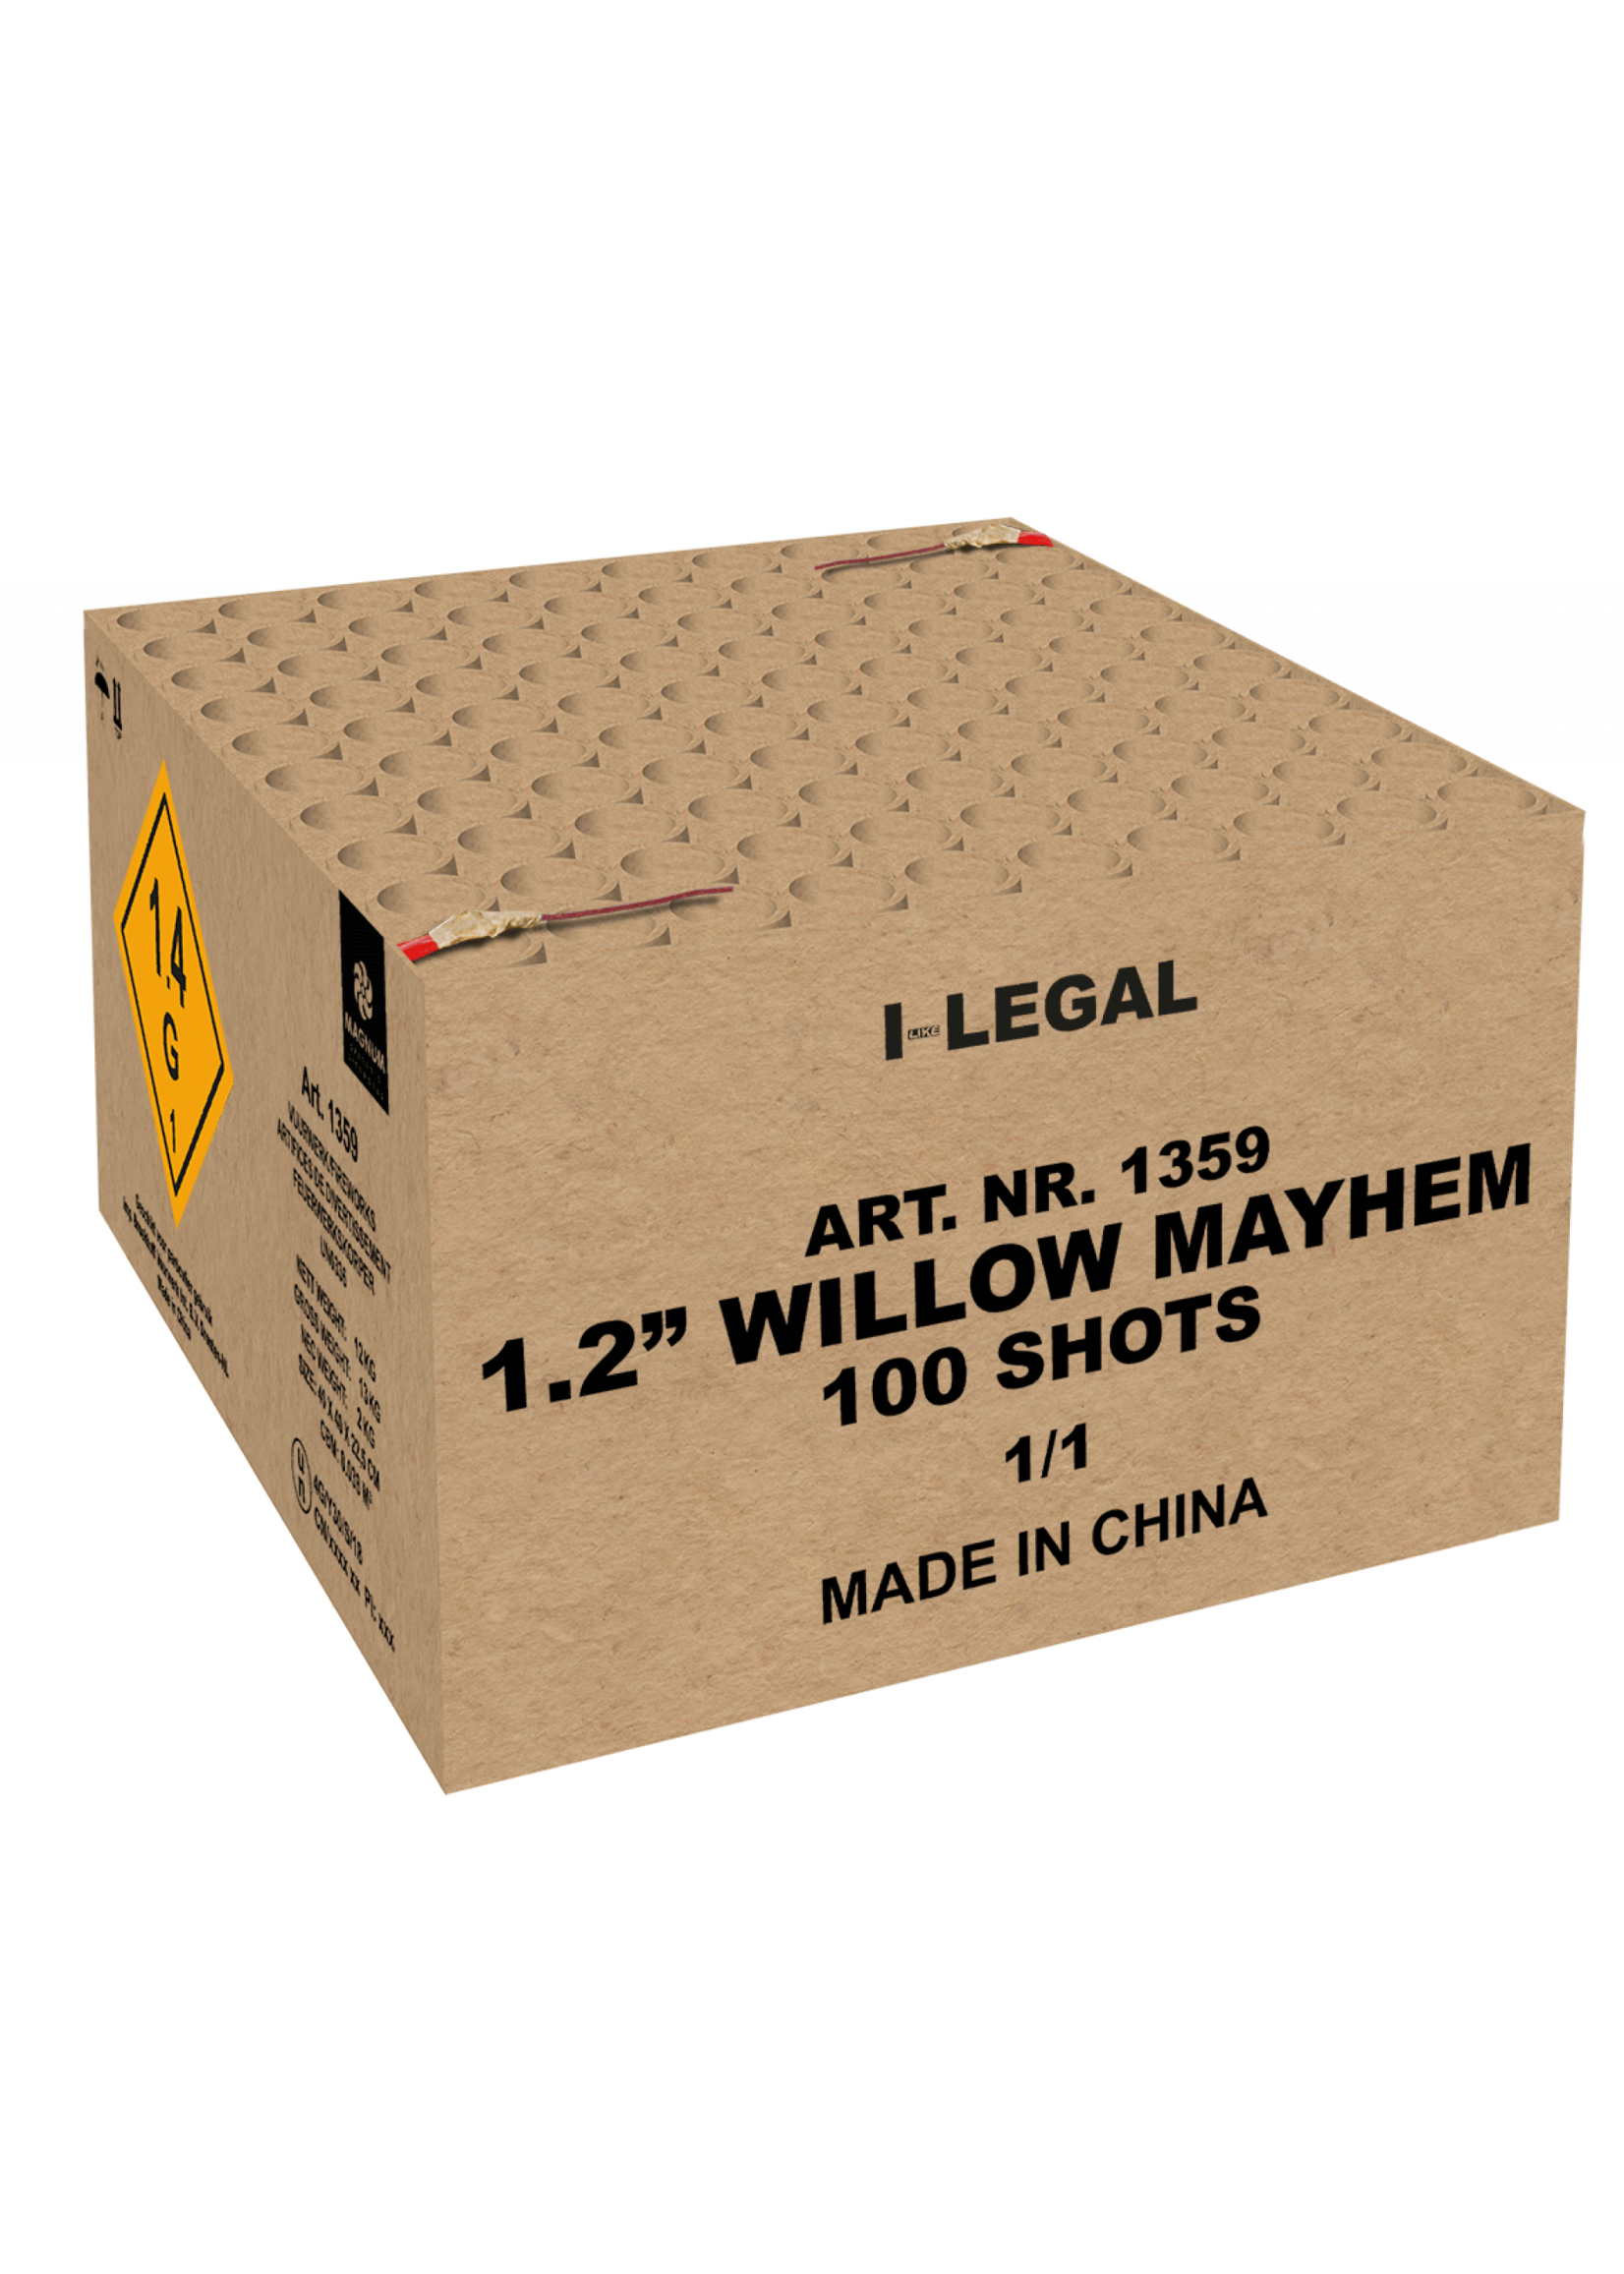 Magnum 1.2 Willow Mayhem 100 shots